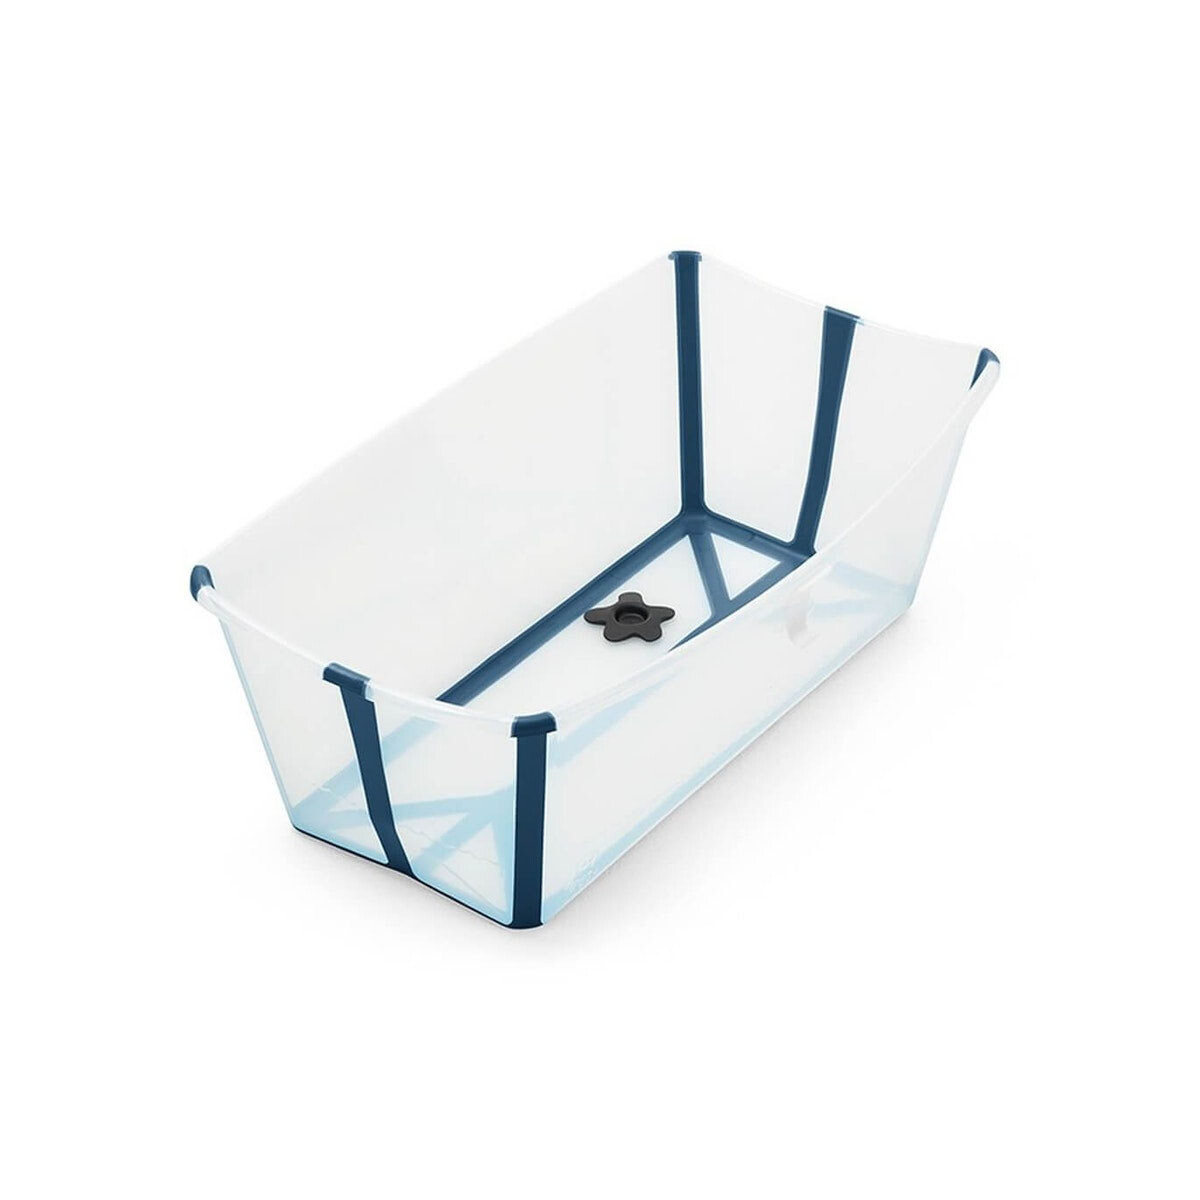 Bañito Plegable Flexi bath stokke - Transparente / Azul 